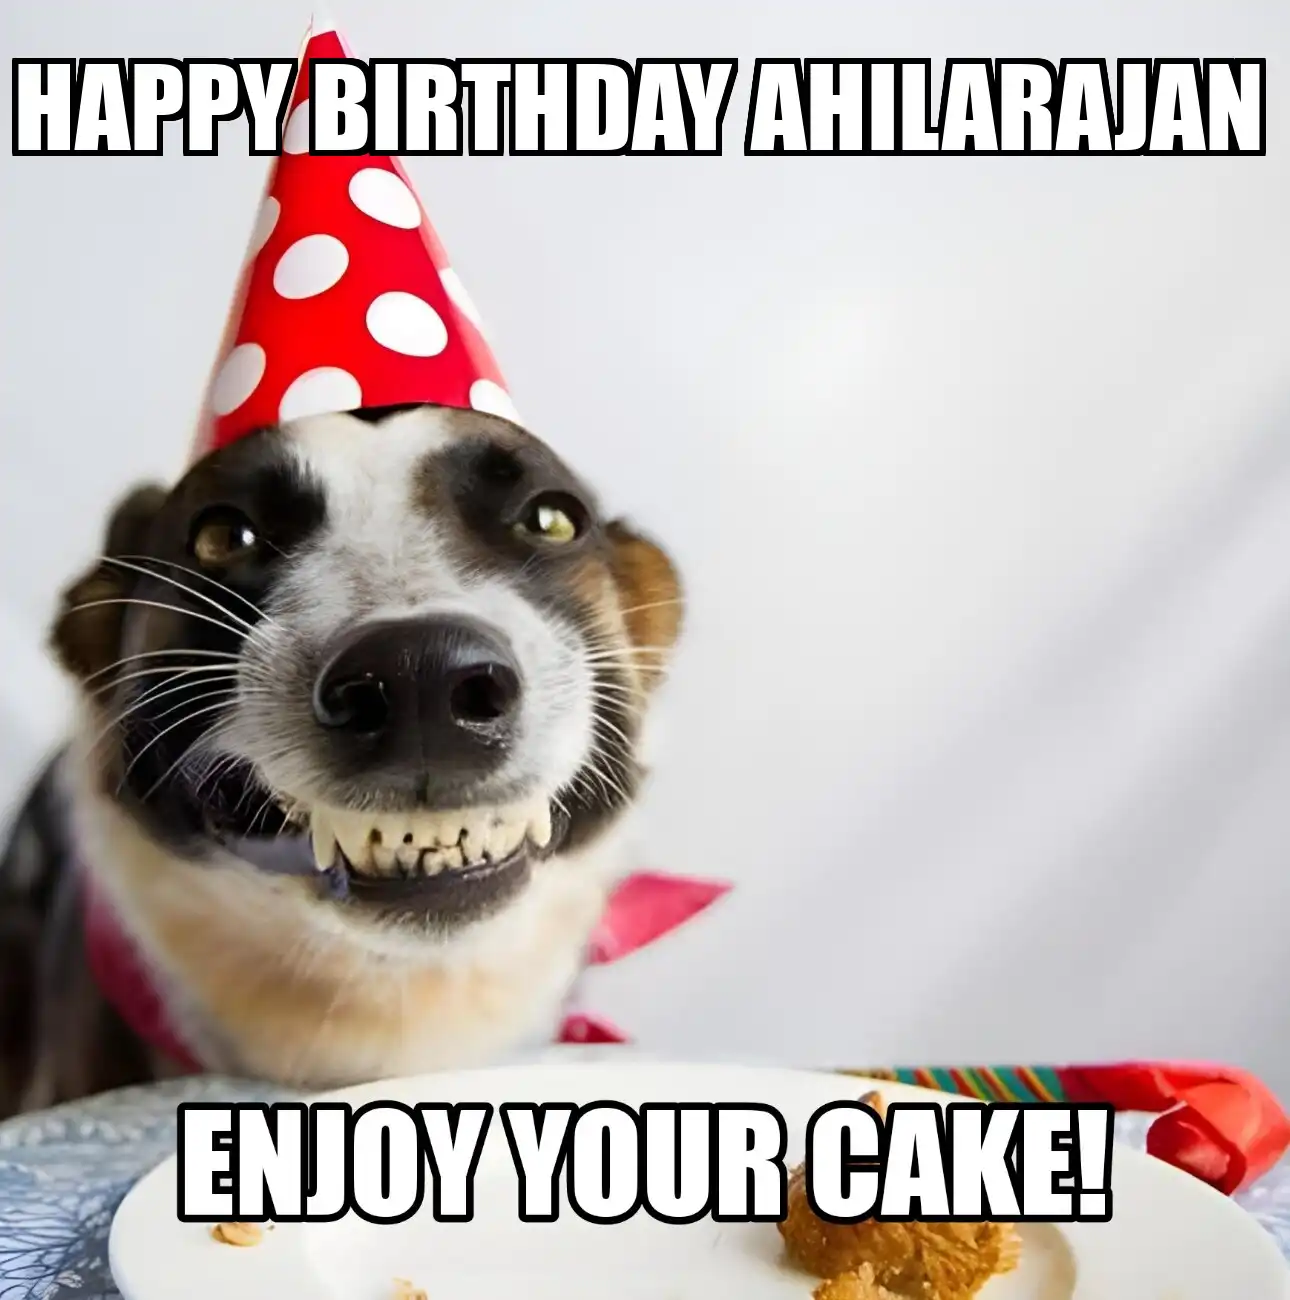 Happy Birthday Ahilarajan Enjoy Your Cake Dog Meme